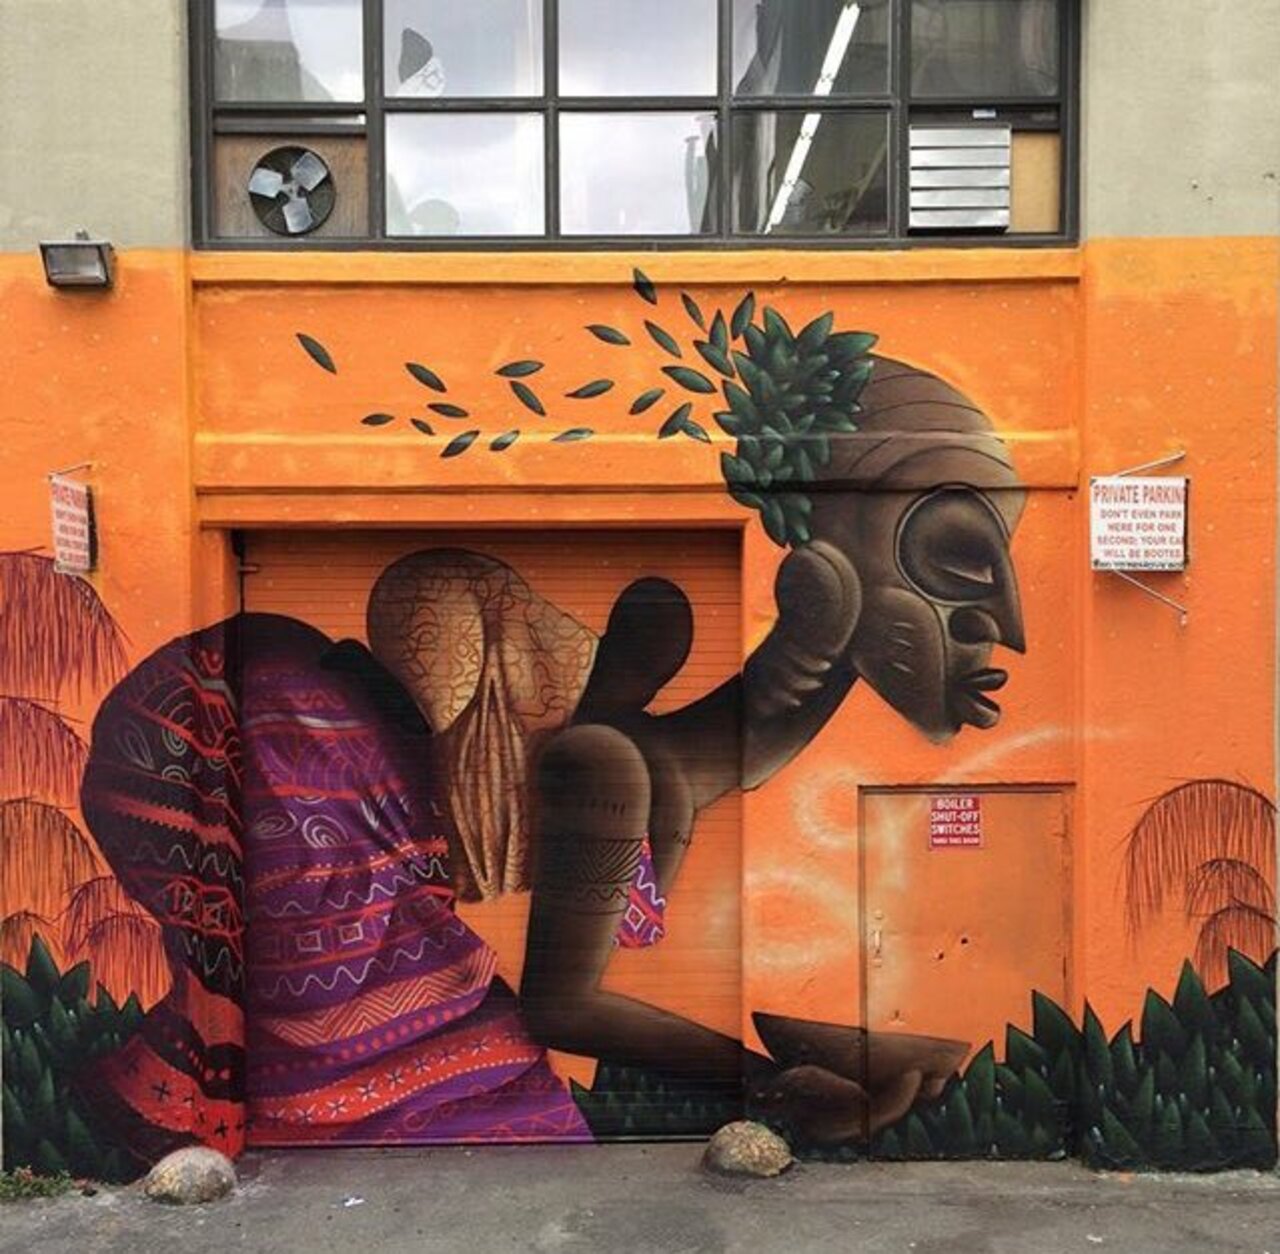 New Street Art by Alexandre Keto in NYC 

#art #graffiti #mural #streetart https://t.co/qbi0MOIaFF